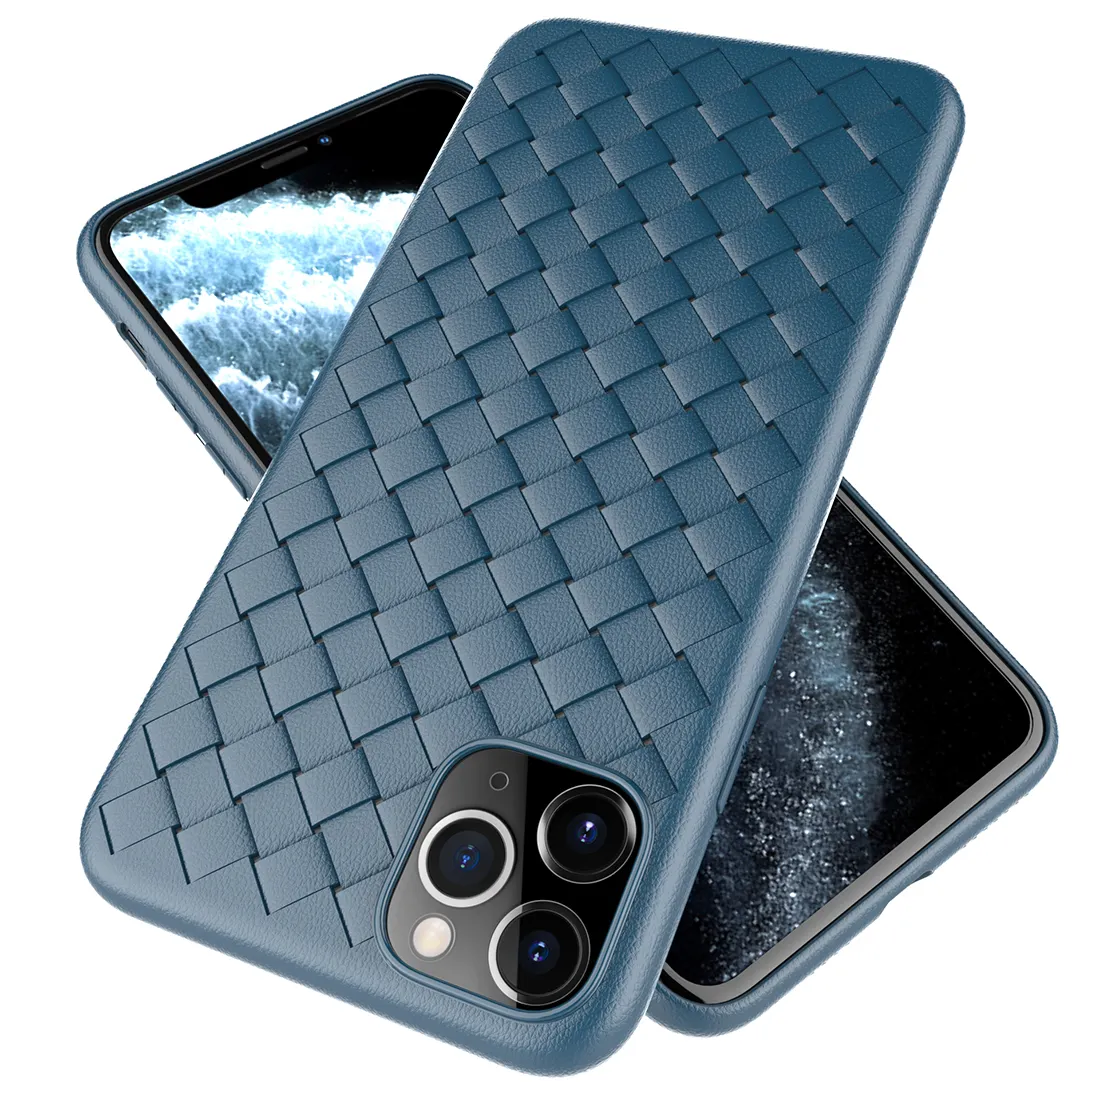 Factory New Design Luxury Mobile Phone Cover für Iphone 6/7/8plus xs MAX Case für Samsung Note 10pro Cover Genuine Leather Case